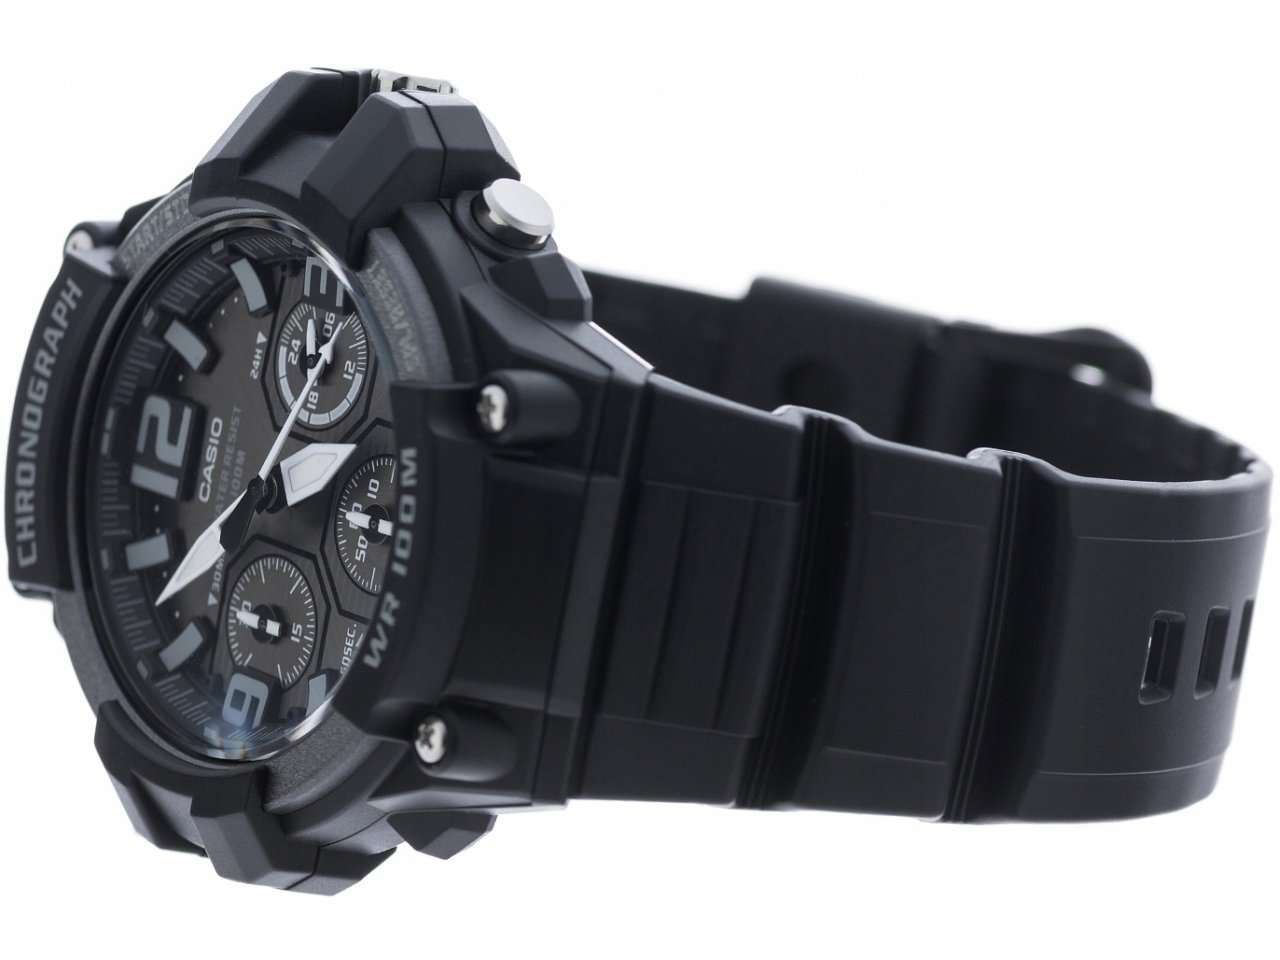 Casio MCW-100H-1A3VDF Black Resin Strap Watch for Men-Watch Portal Philippines